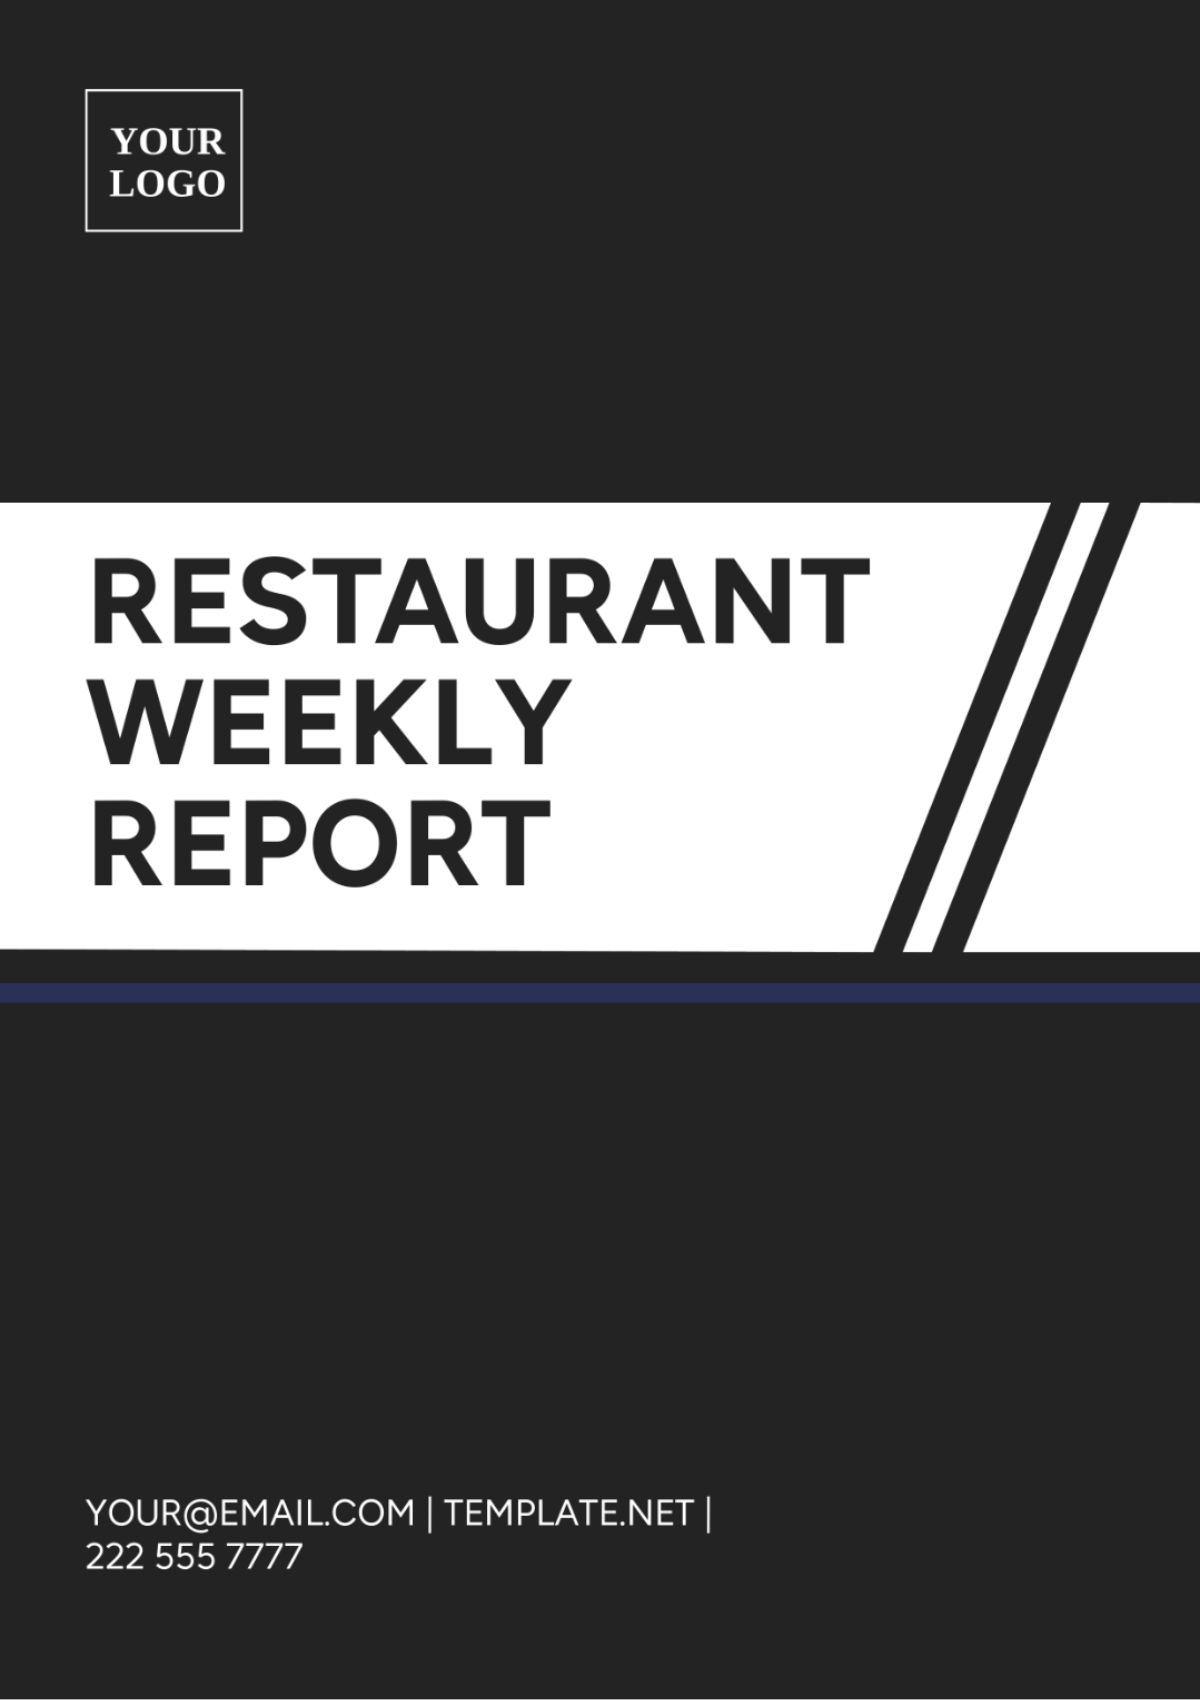 Restaurant Weekly Report Template